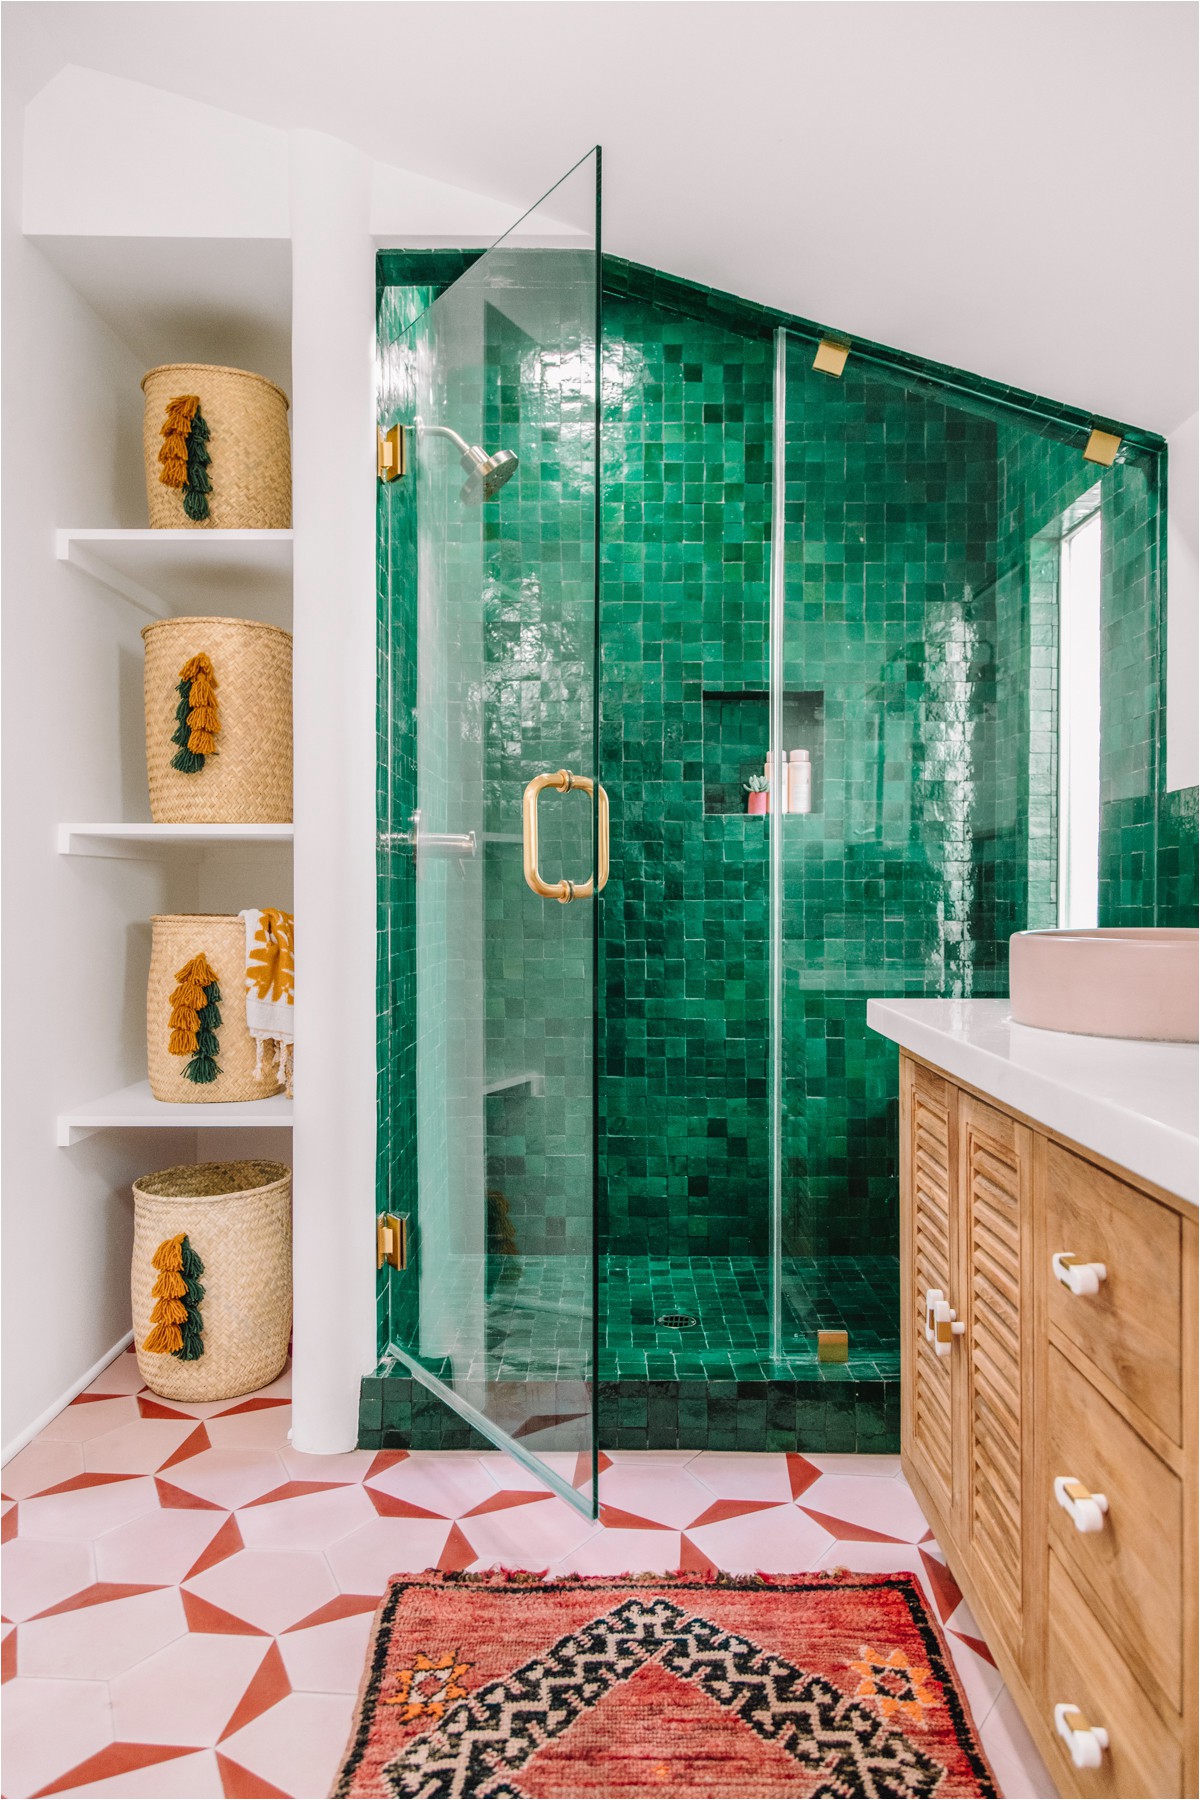 Kelly Green Bathroom Rugs the Mindwelling Our Main Bathroom Reveal Studio Diy